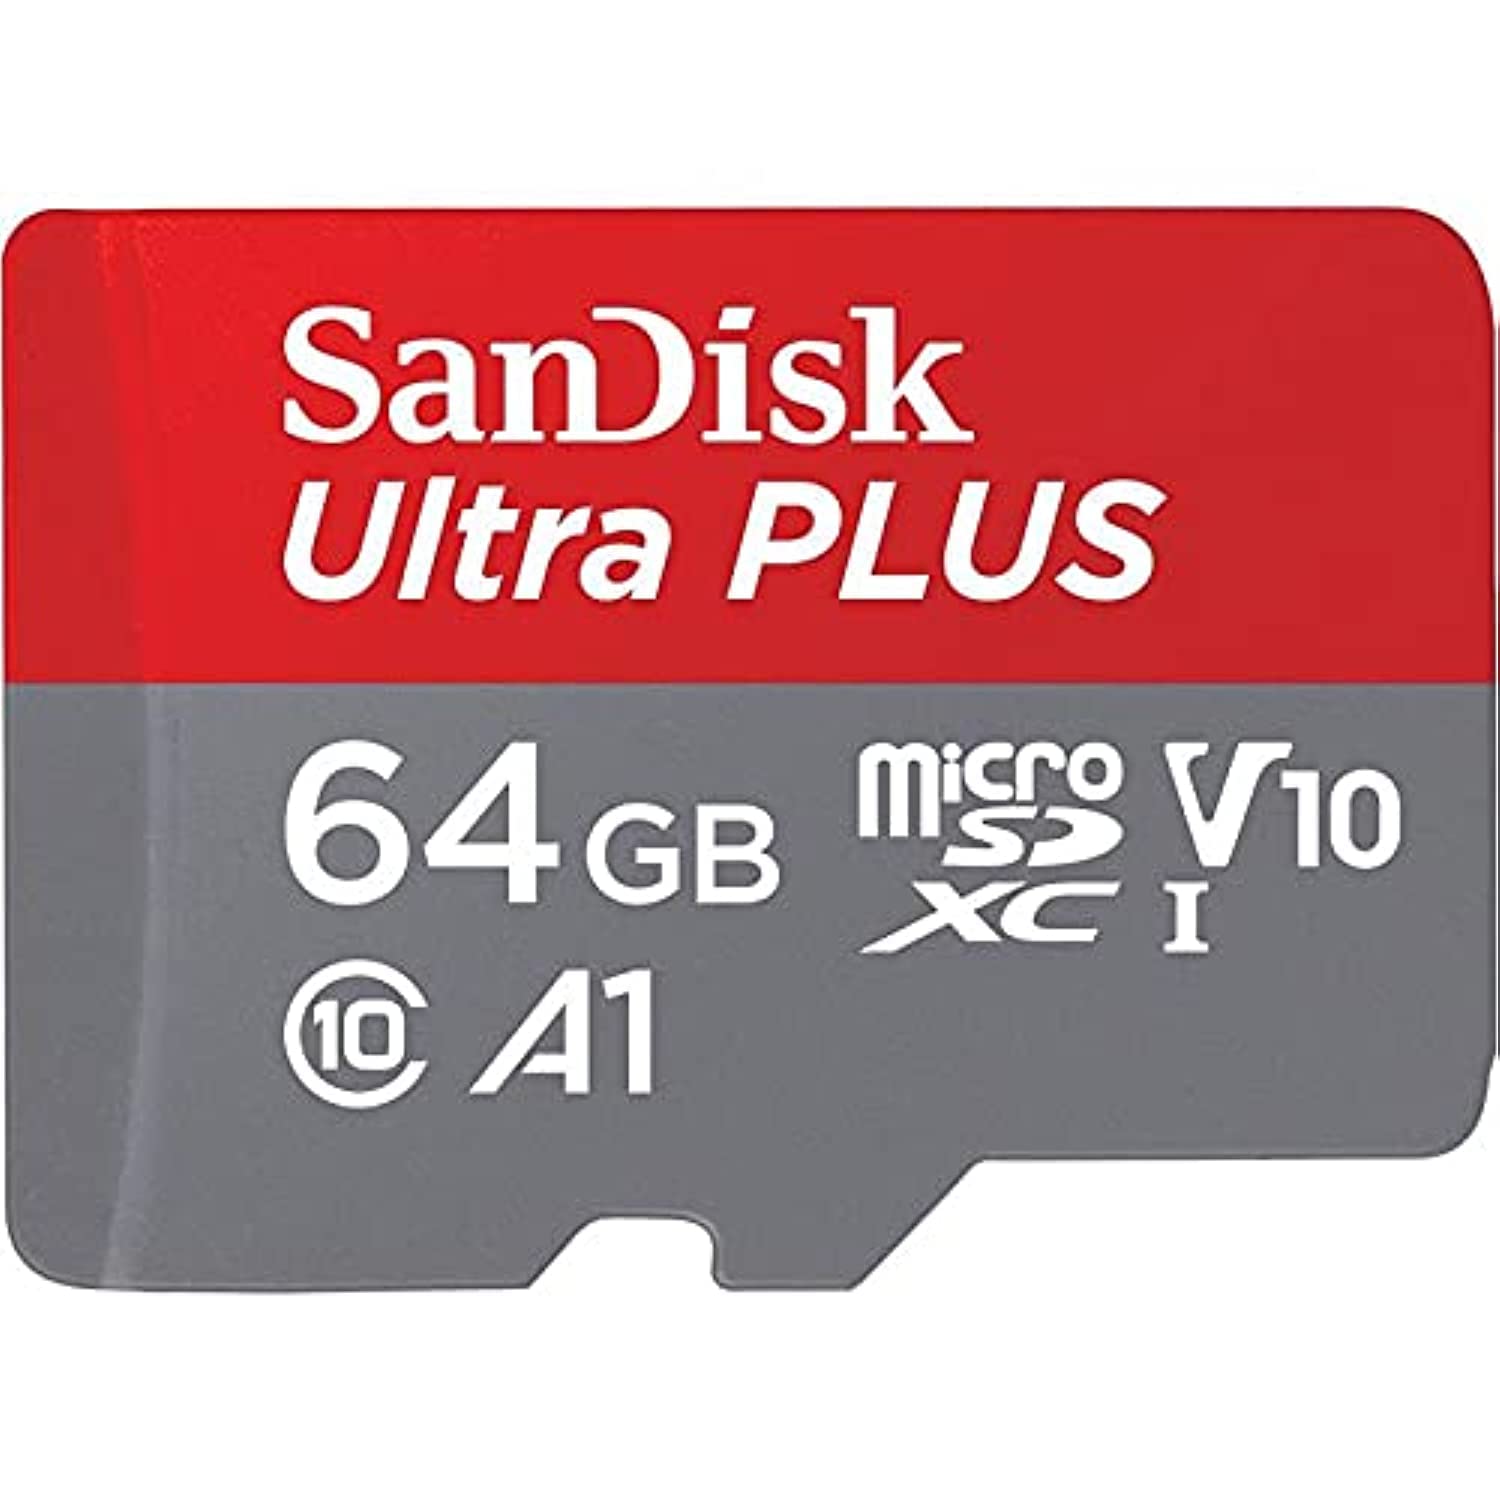 Sandisk Ultra Plus 64GB MicroSDXC UHS-I Card with Adapter 130MBs Class 10 U1 A1並行輸入品